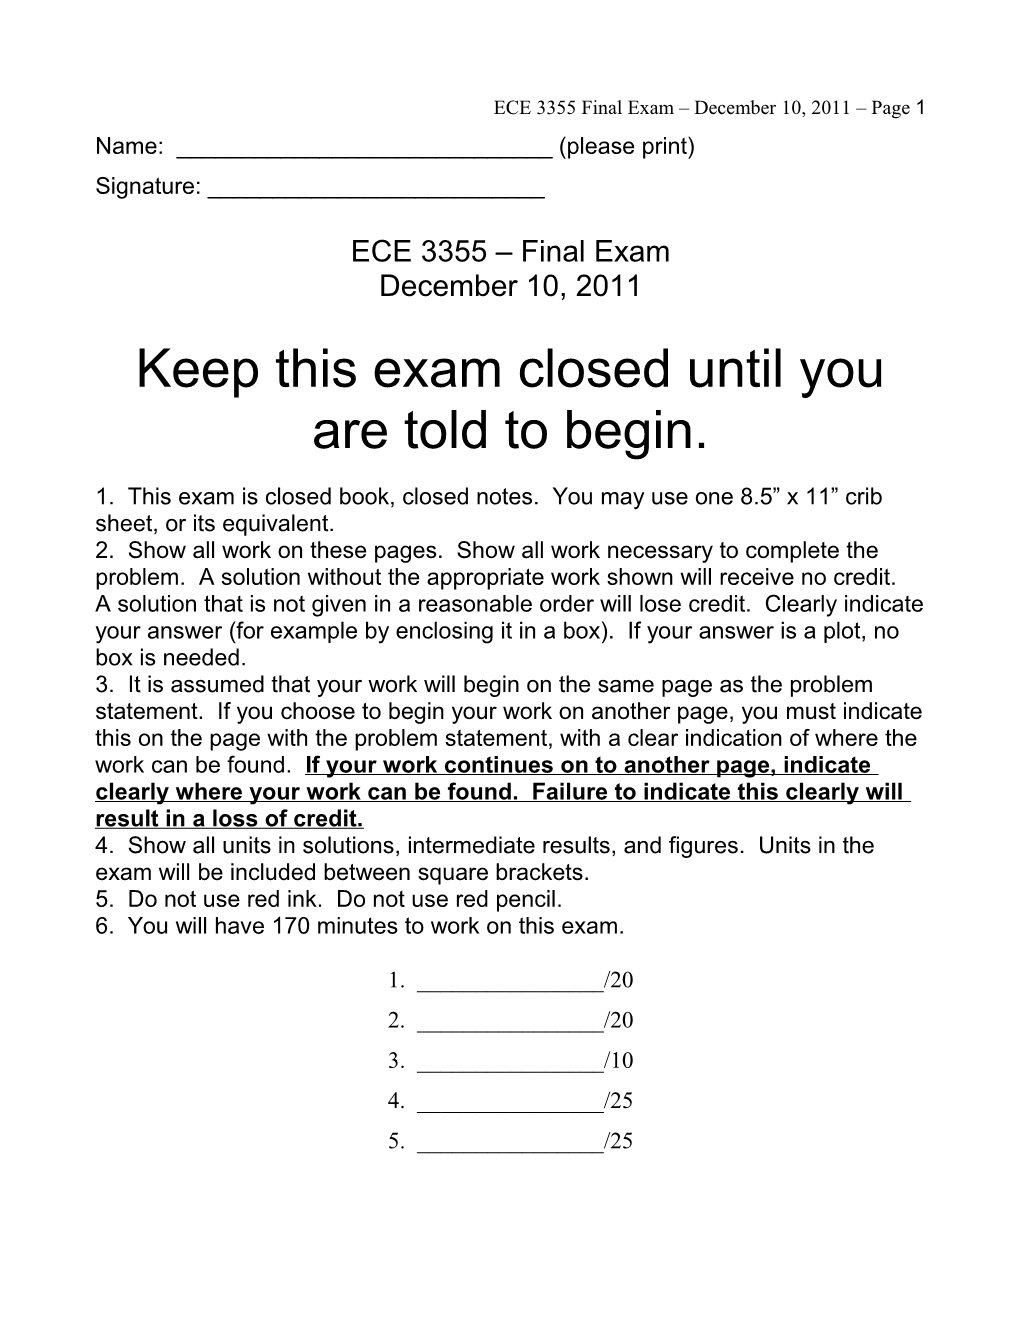 ECE 3355 Final Exam December 10, 2011 Page 1